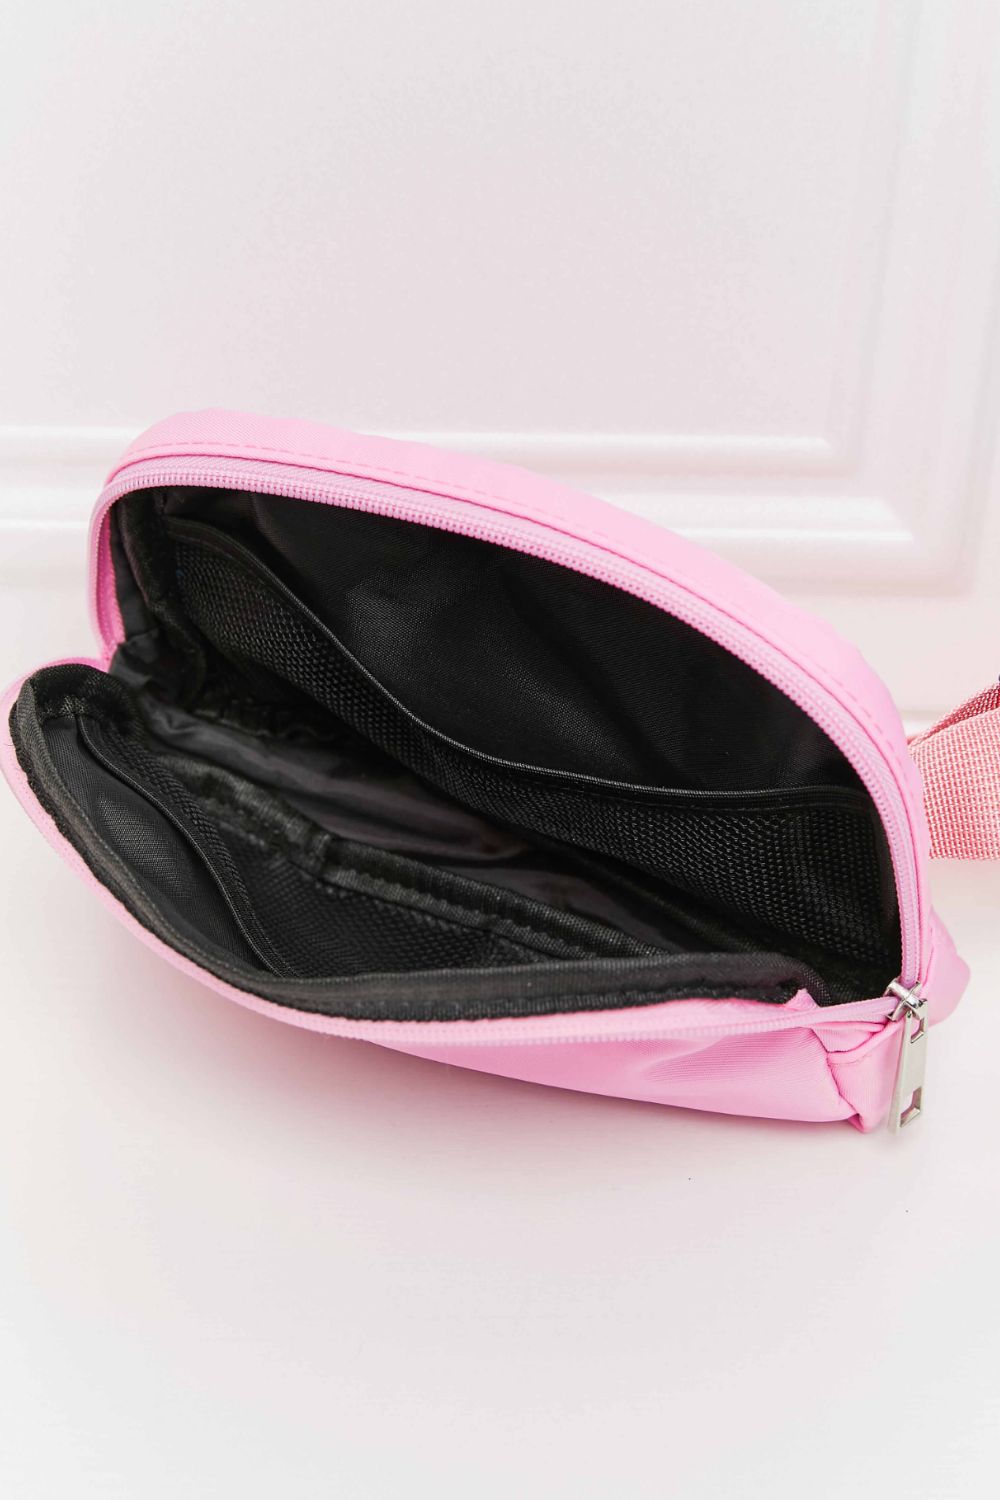 Buckle Zip Closure Pink Fanny Pack